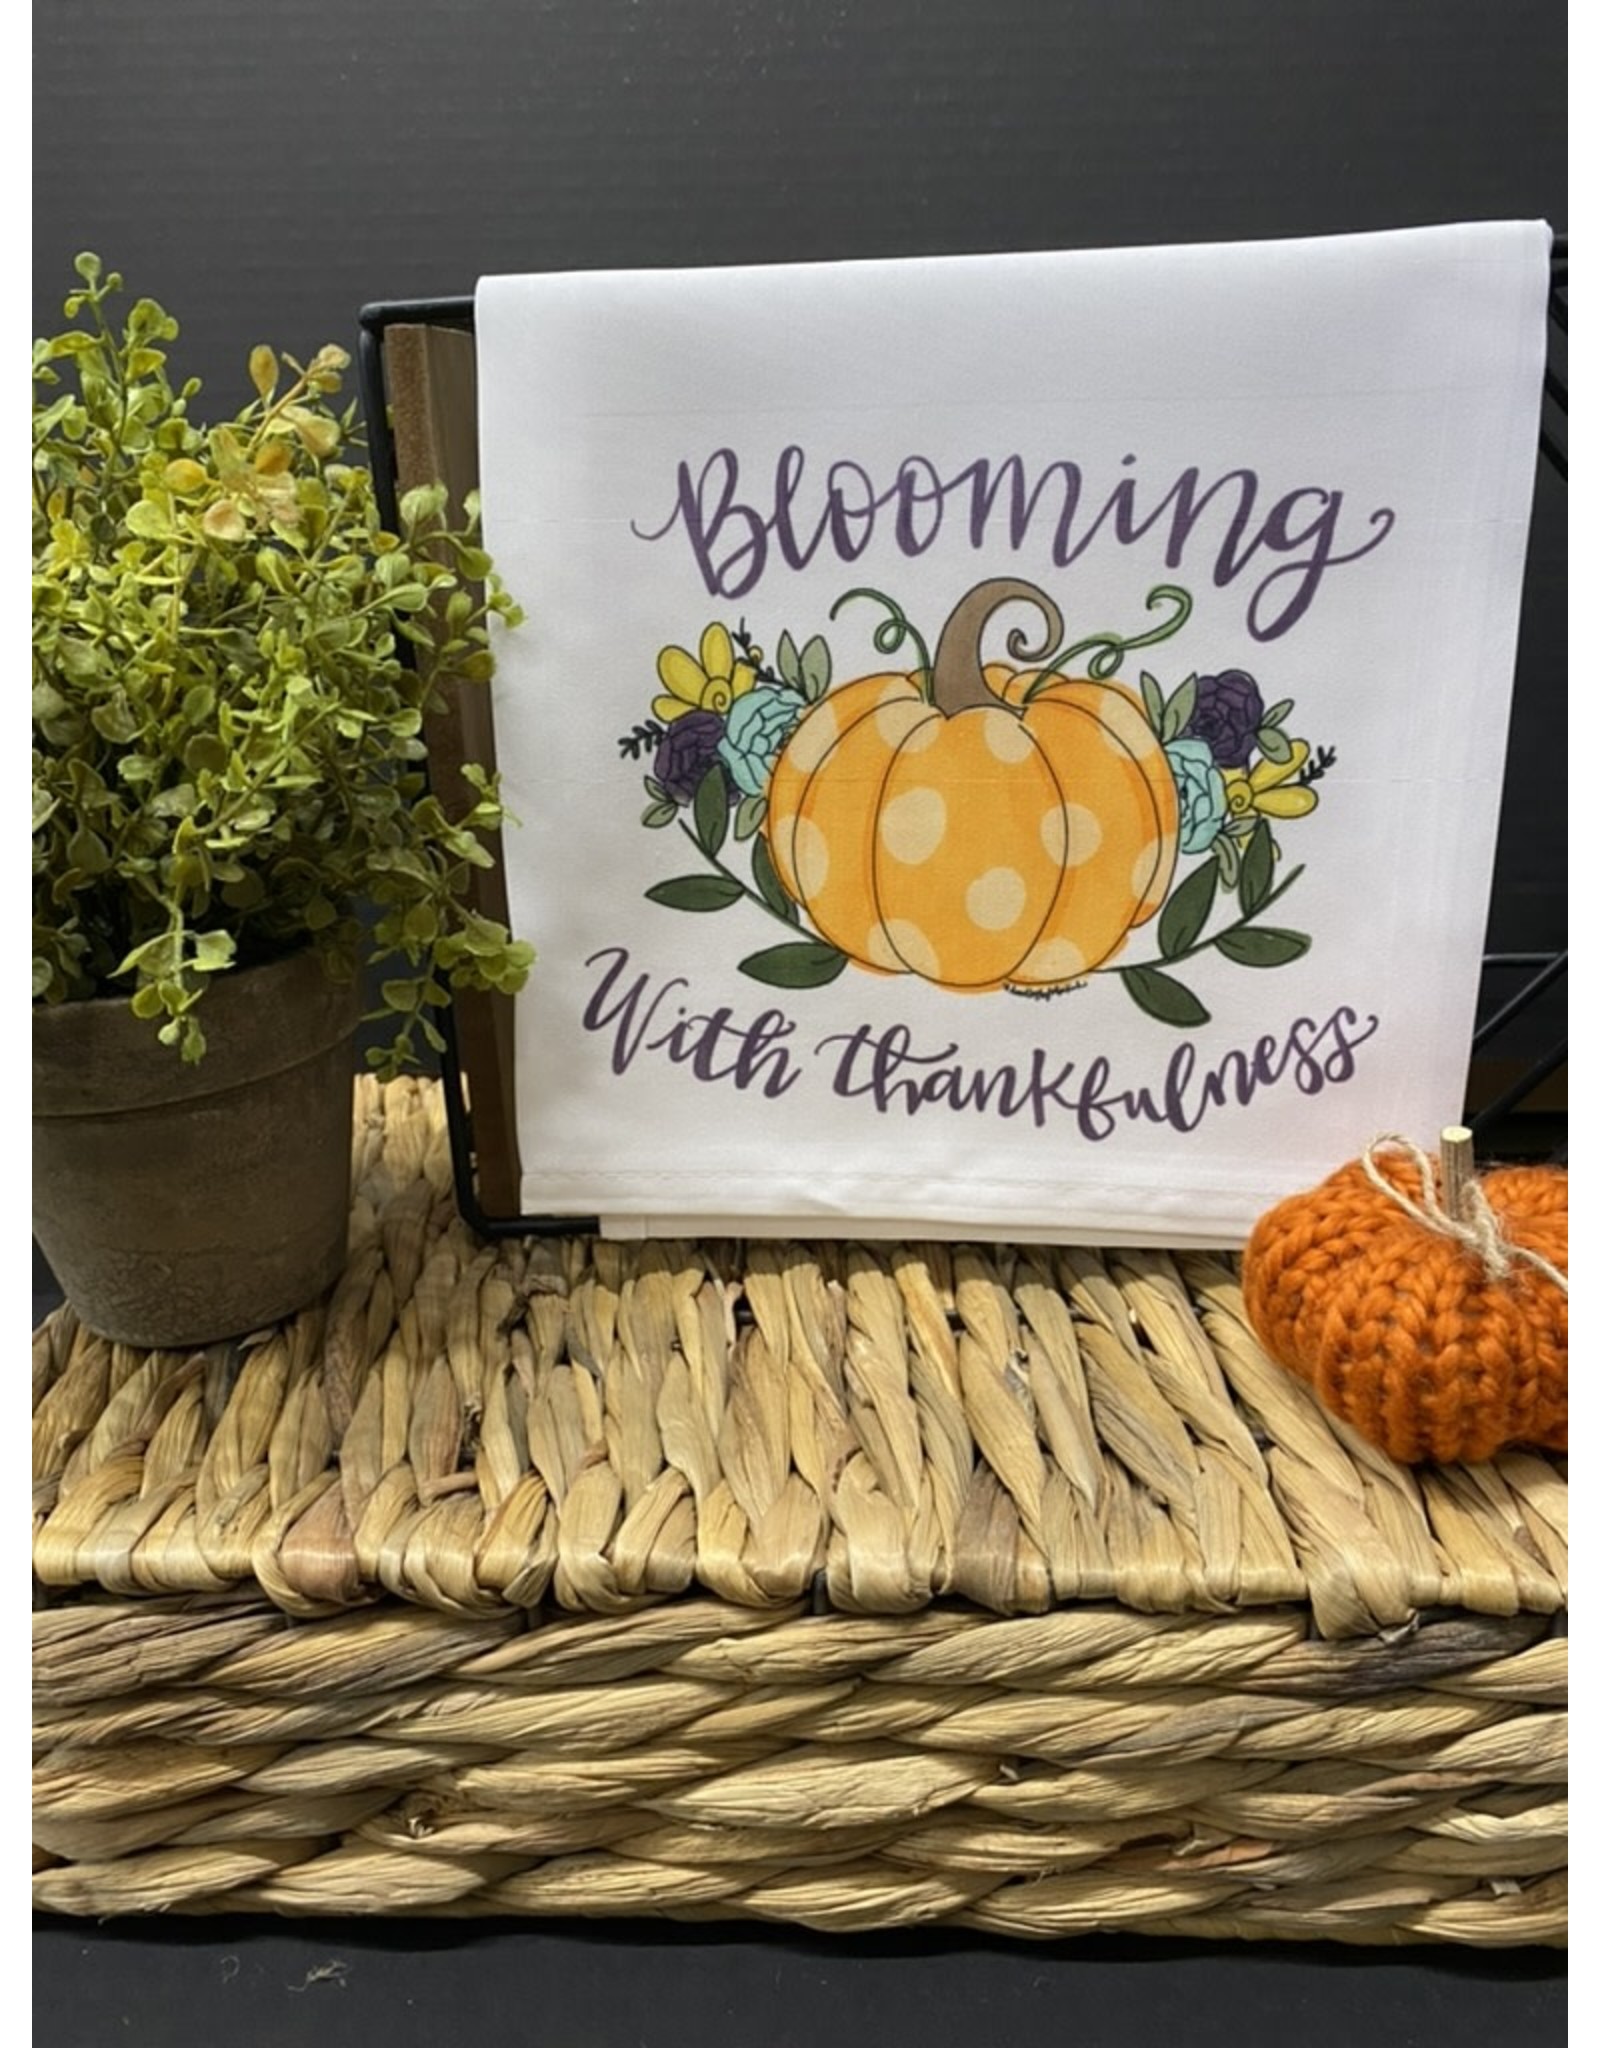 Doodles by Rebekah Blooming with Thankfulness Tea Towel